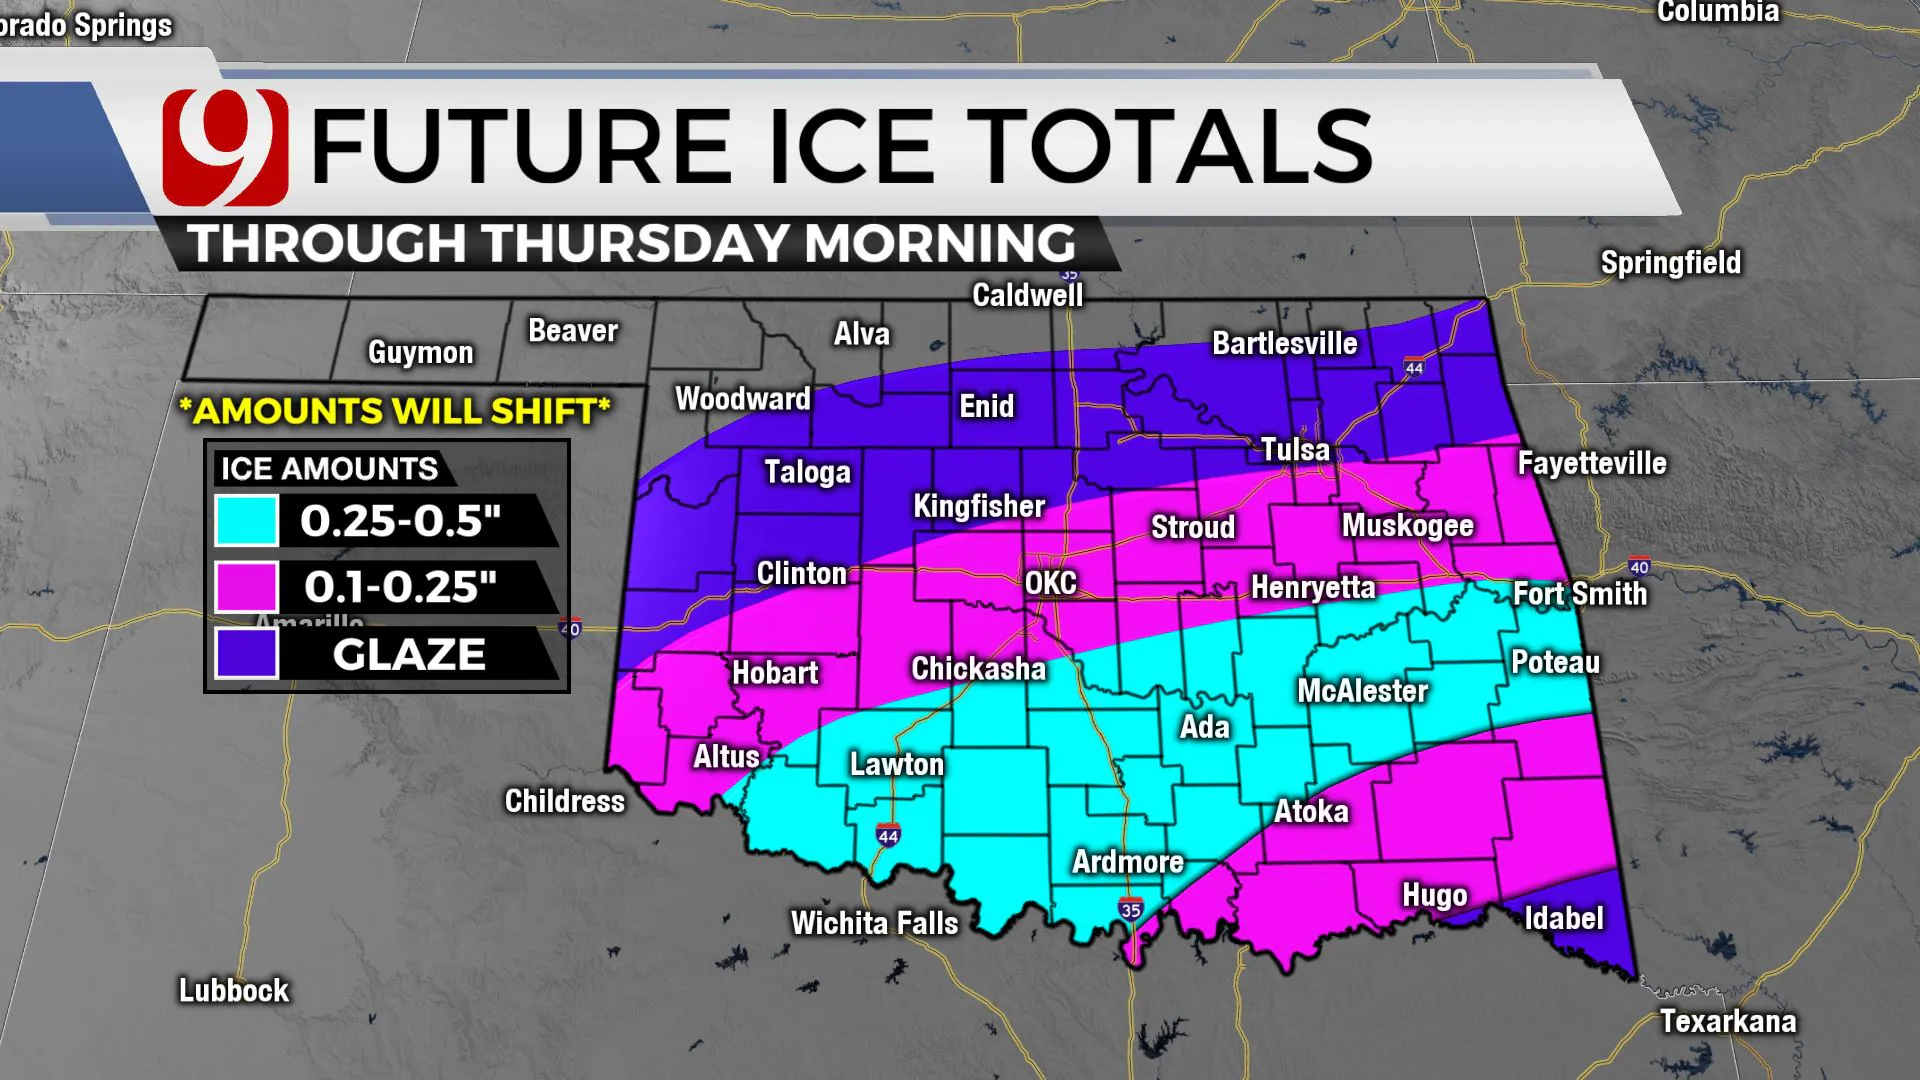 Future ice totals through Thursday.